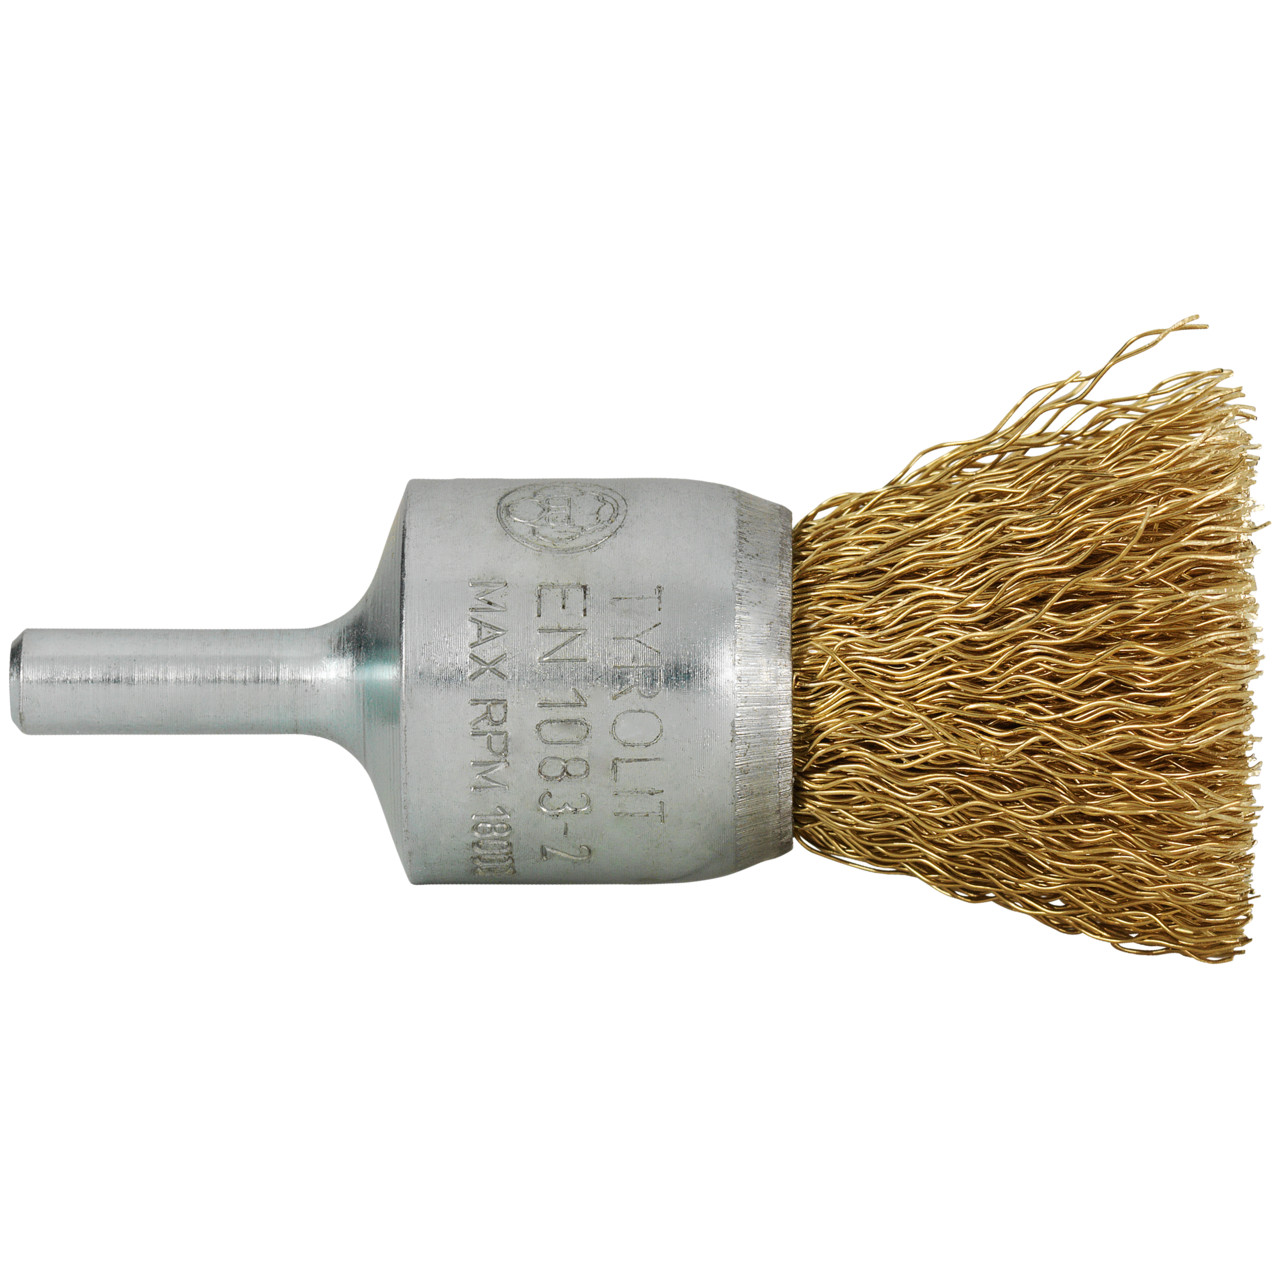 Tyrolit Brush brushes DxH-GExI 12x20-6x60 For non-ferrous metals, shape: 52PDW - (brush brushes), Art. 903343